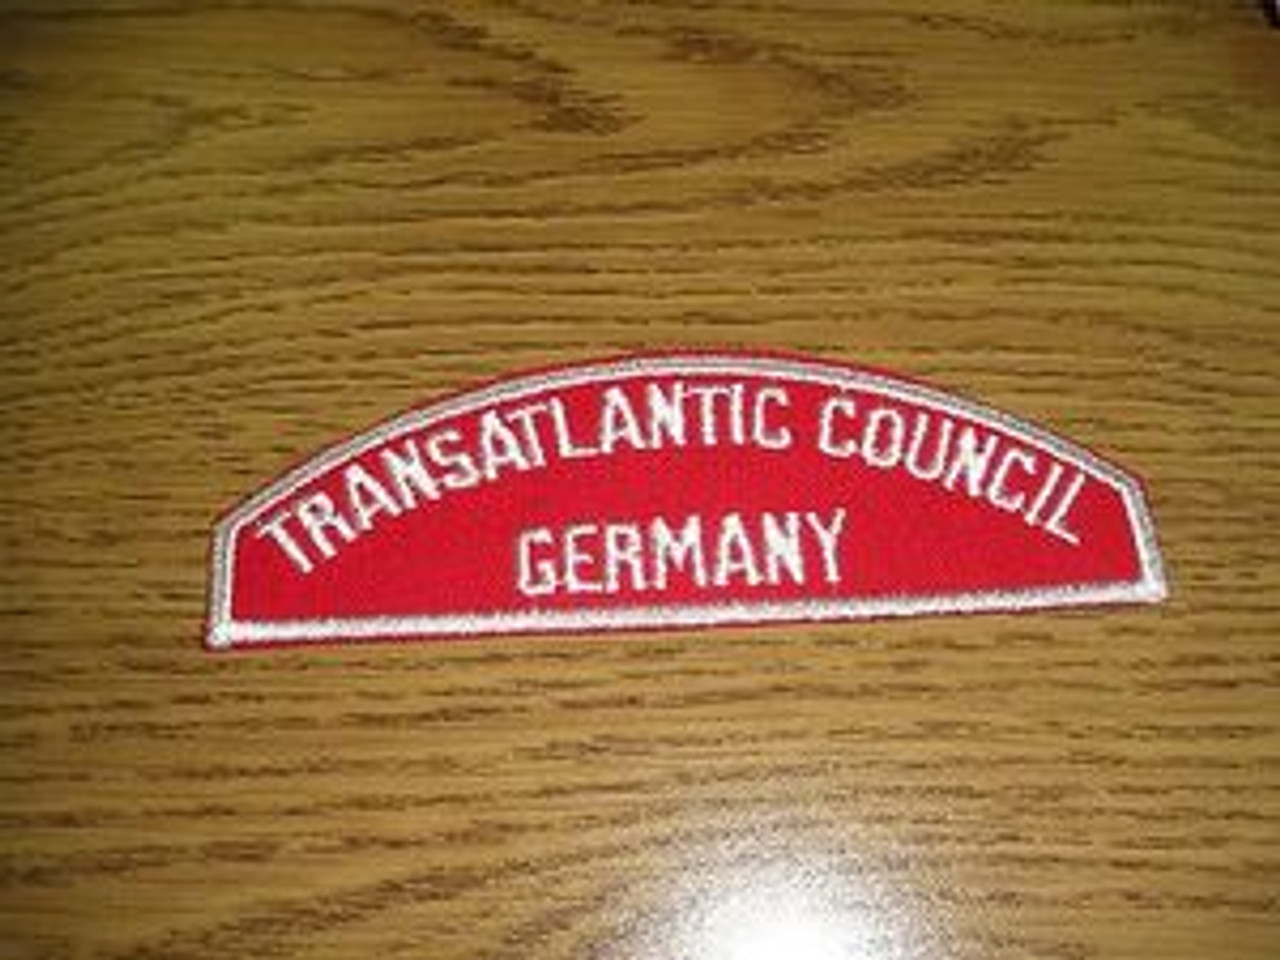 Transatlantic Council GERMANY Red/White Council Strip